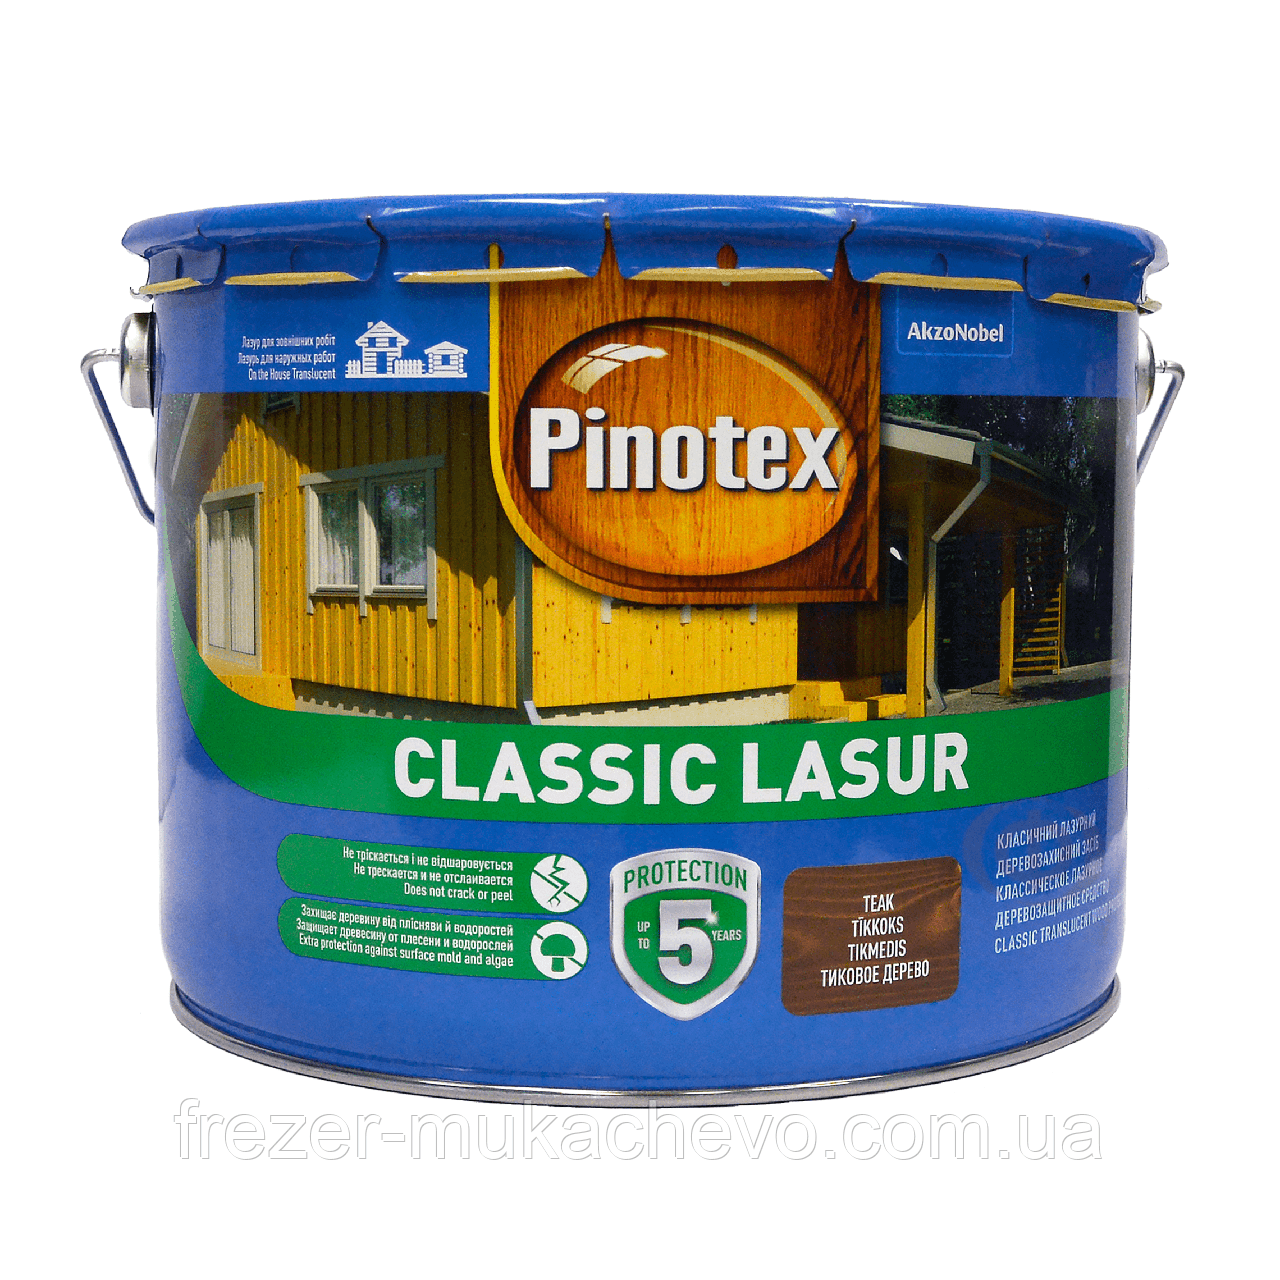 Pinotex Classic орегон 10 л